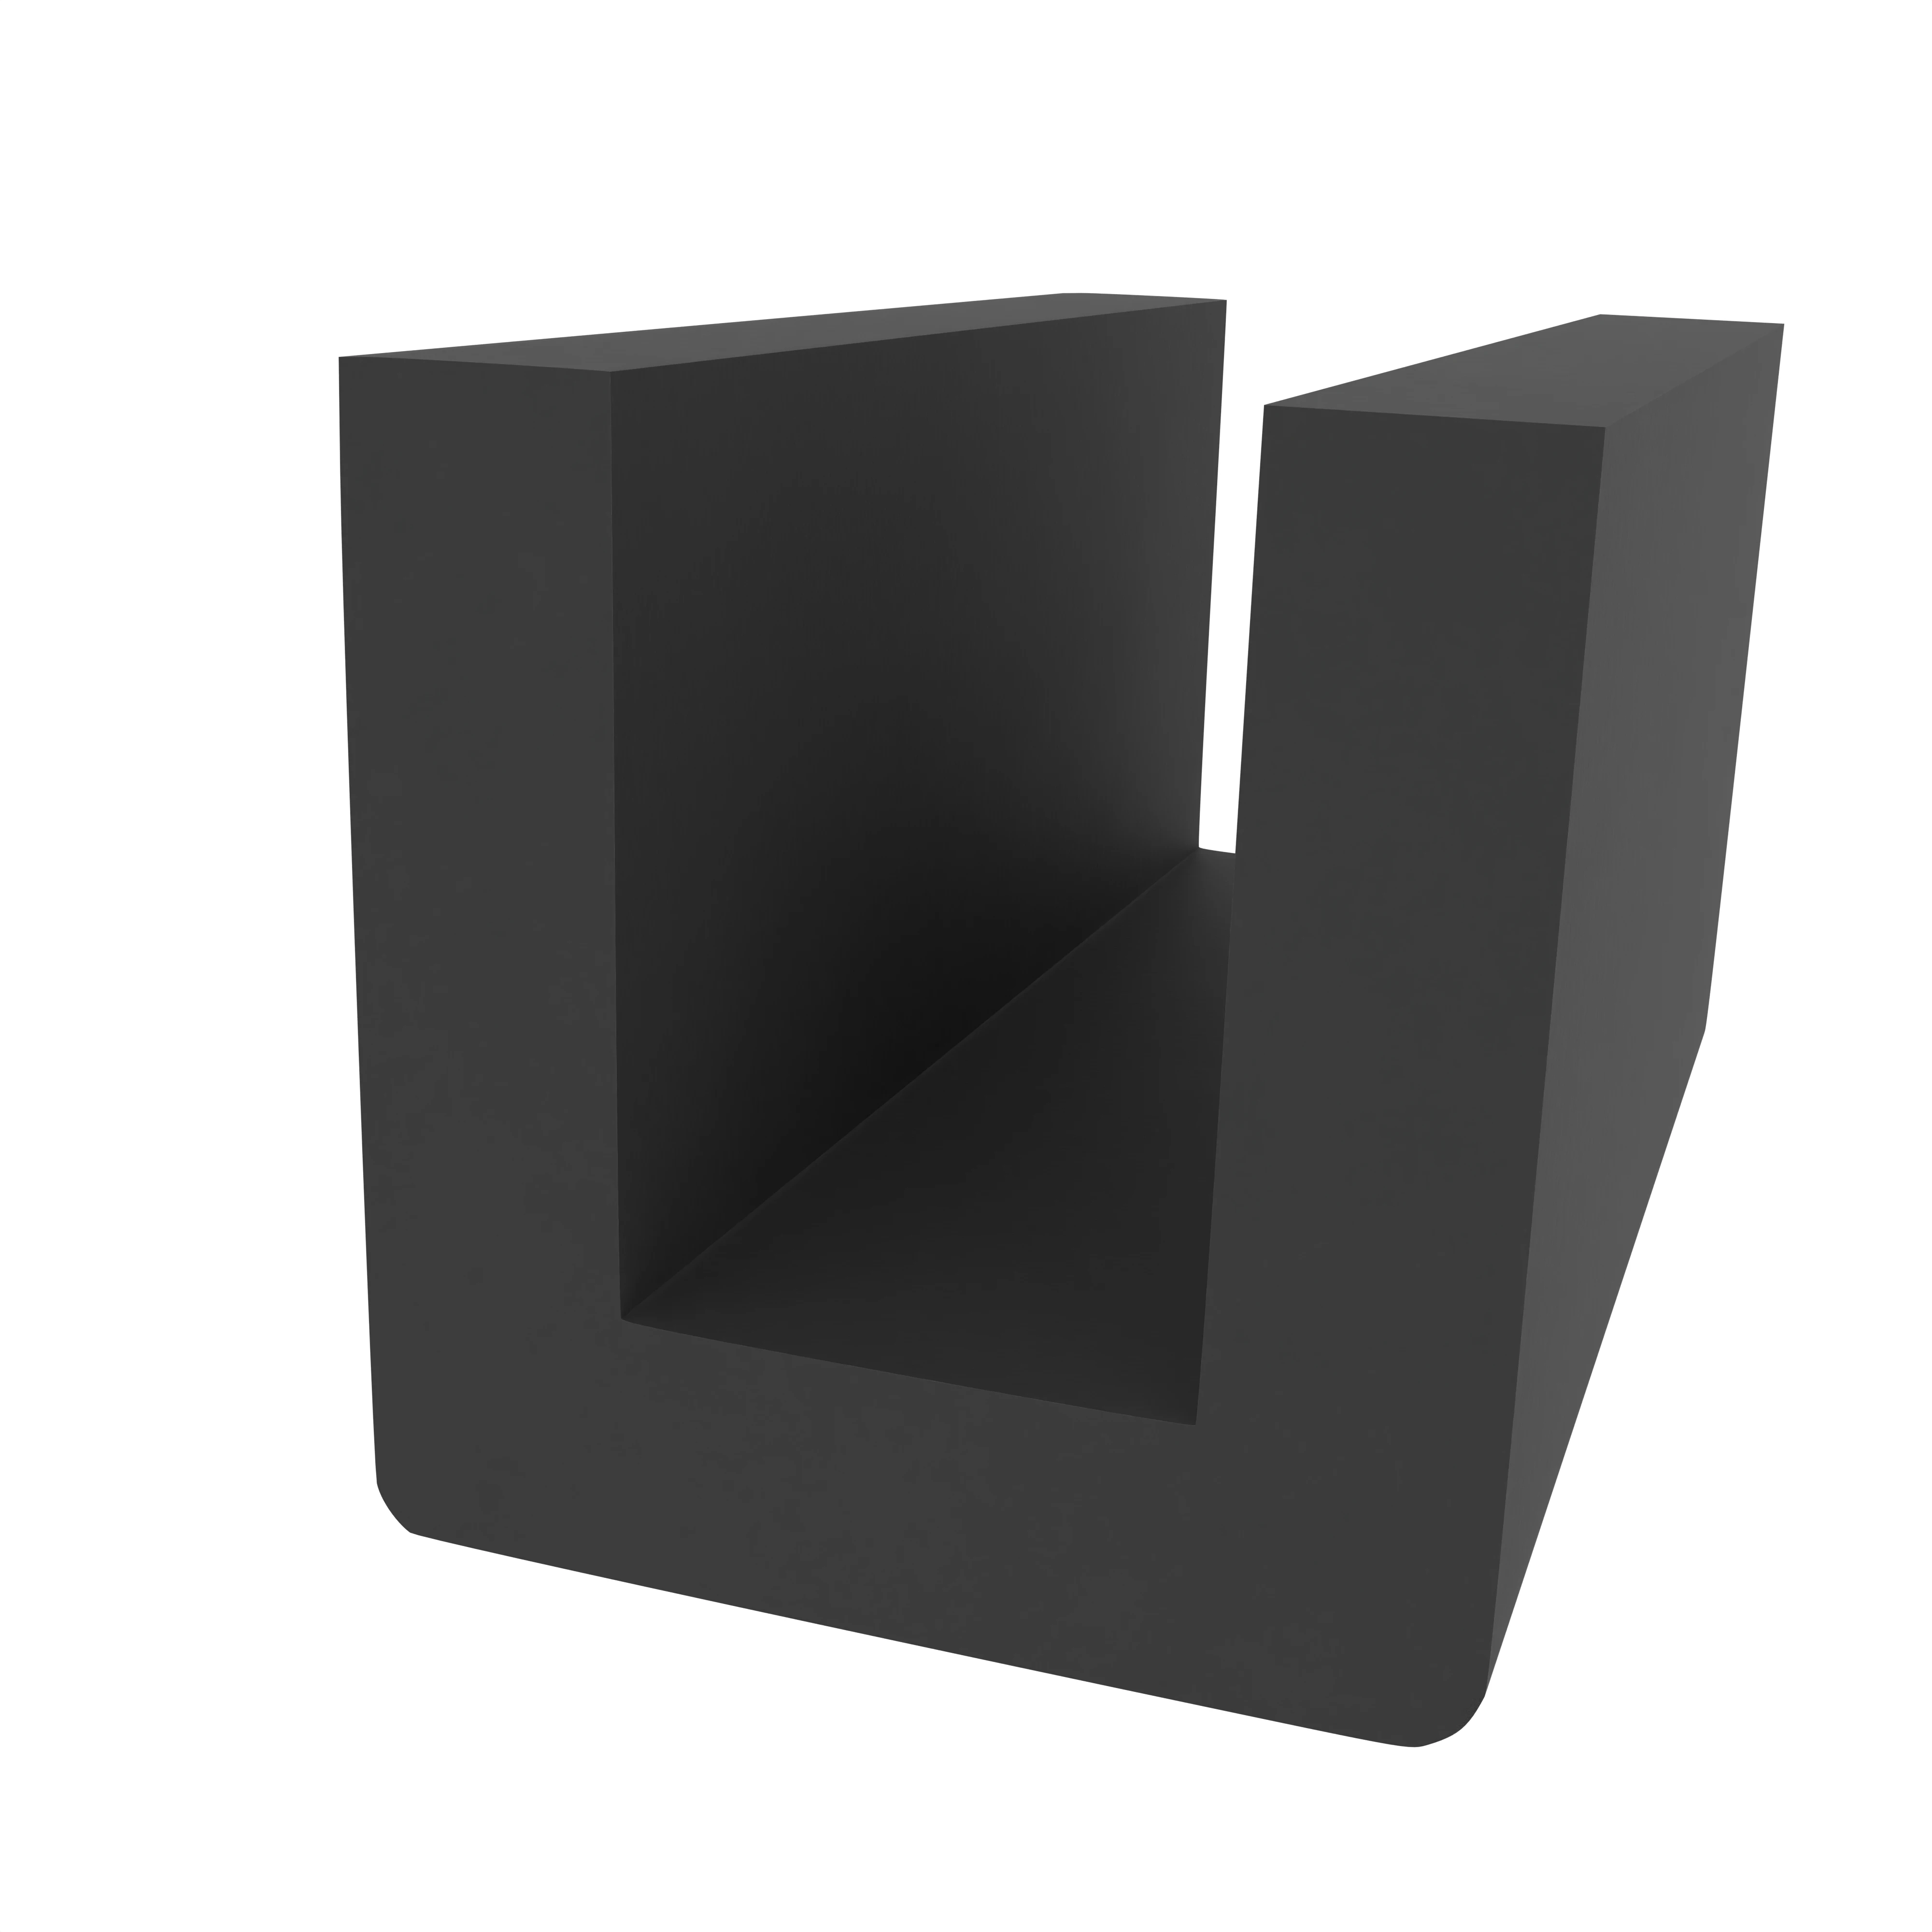 Kantenschutzprofil | Höhe: 25 mm | Farbe: schwarz